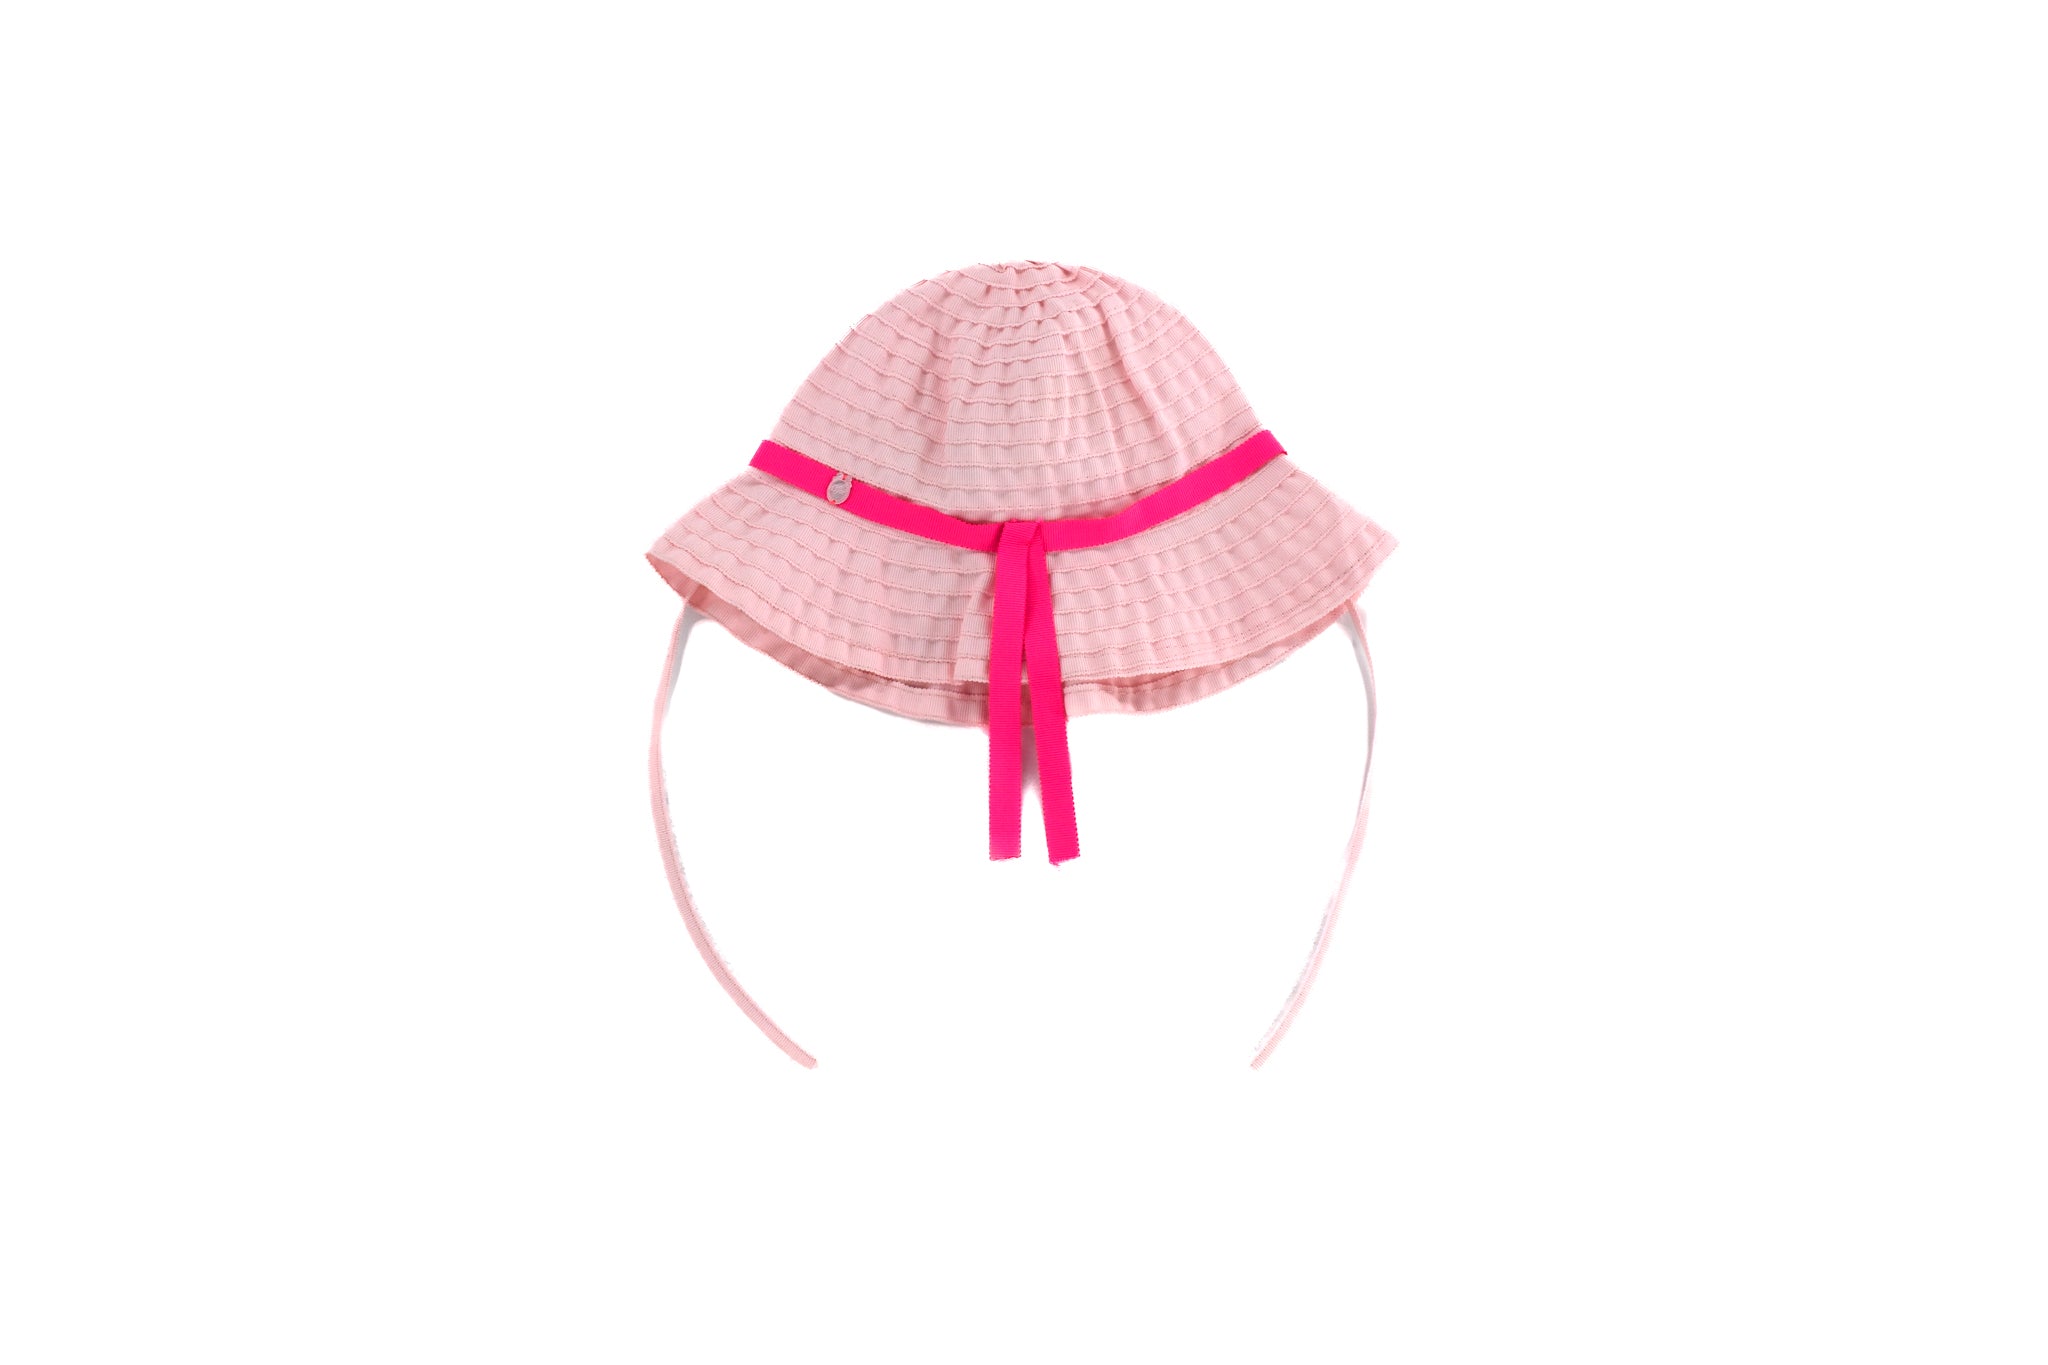 Dior Pink Bucket Hat Switzerland SAVE 59  jabonissimocom